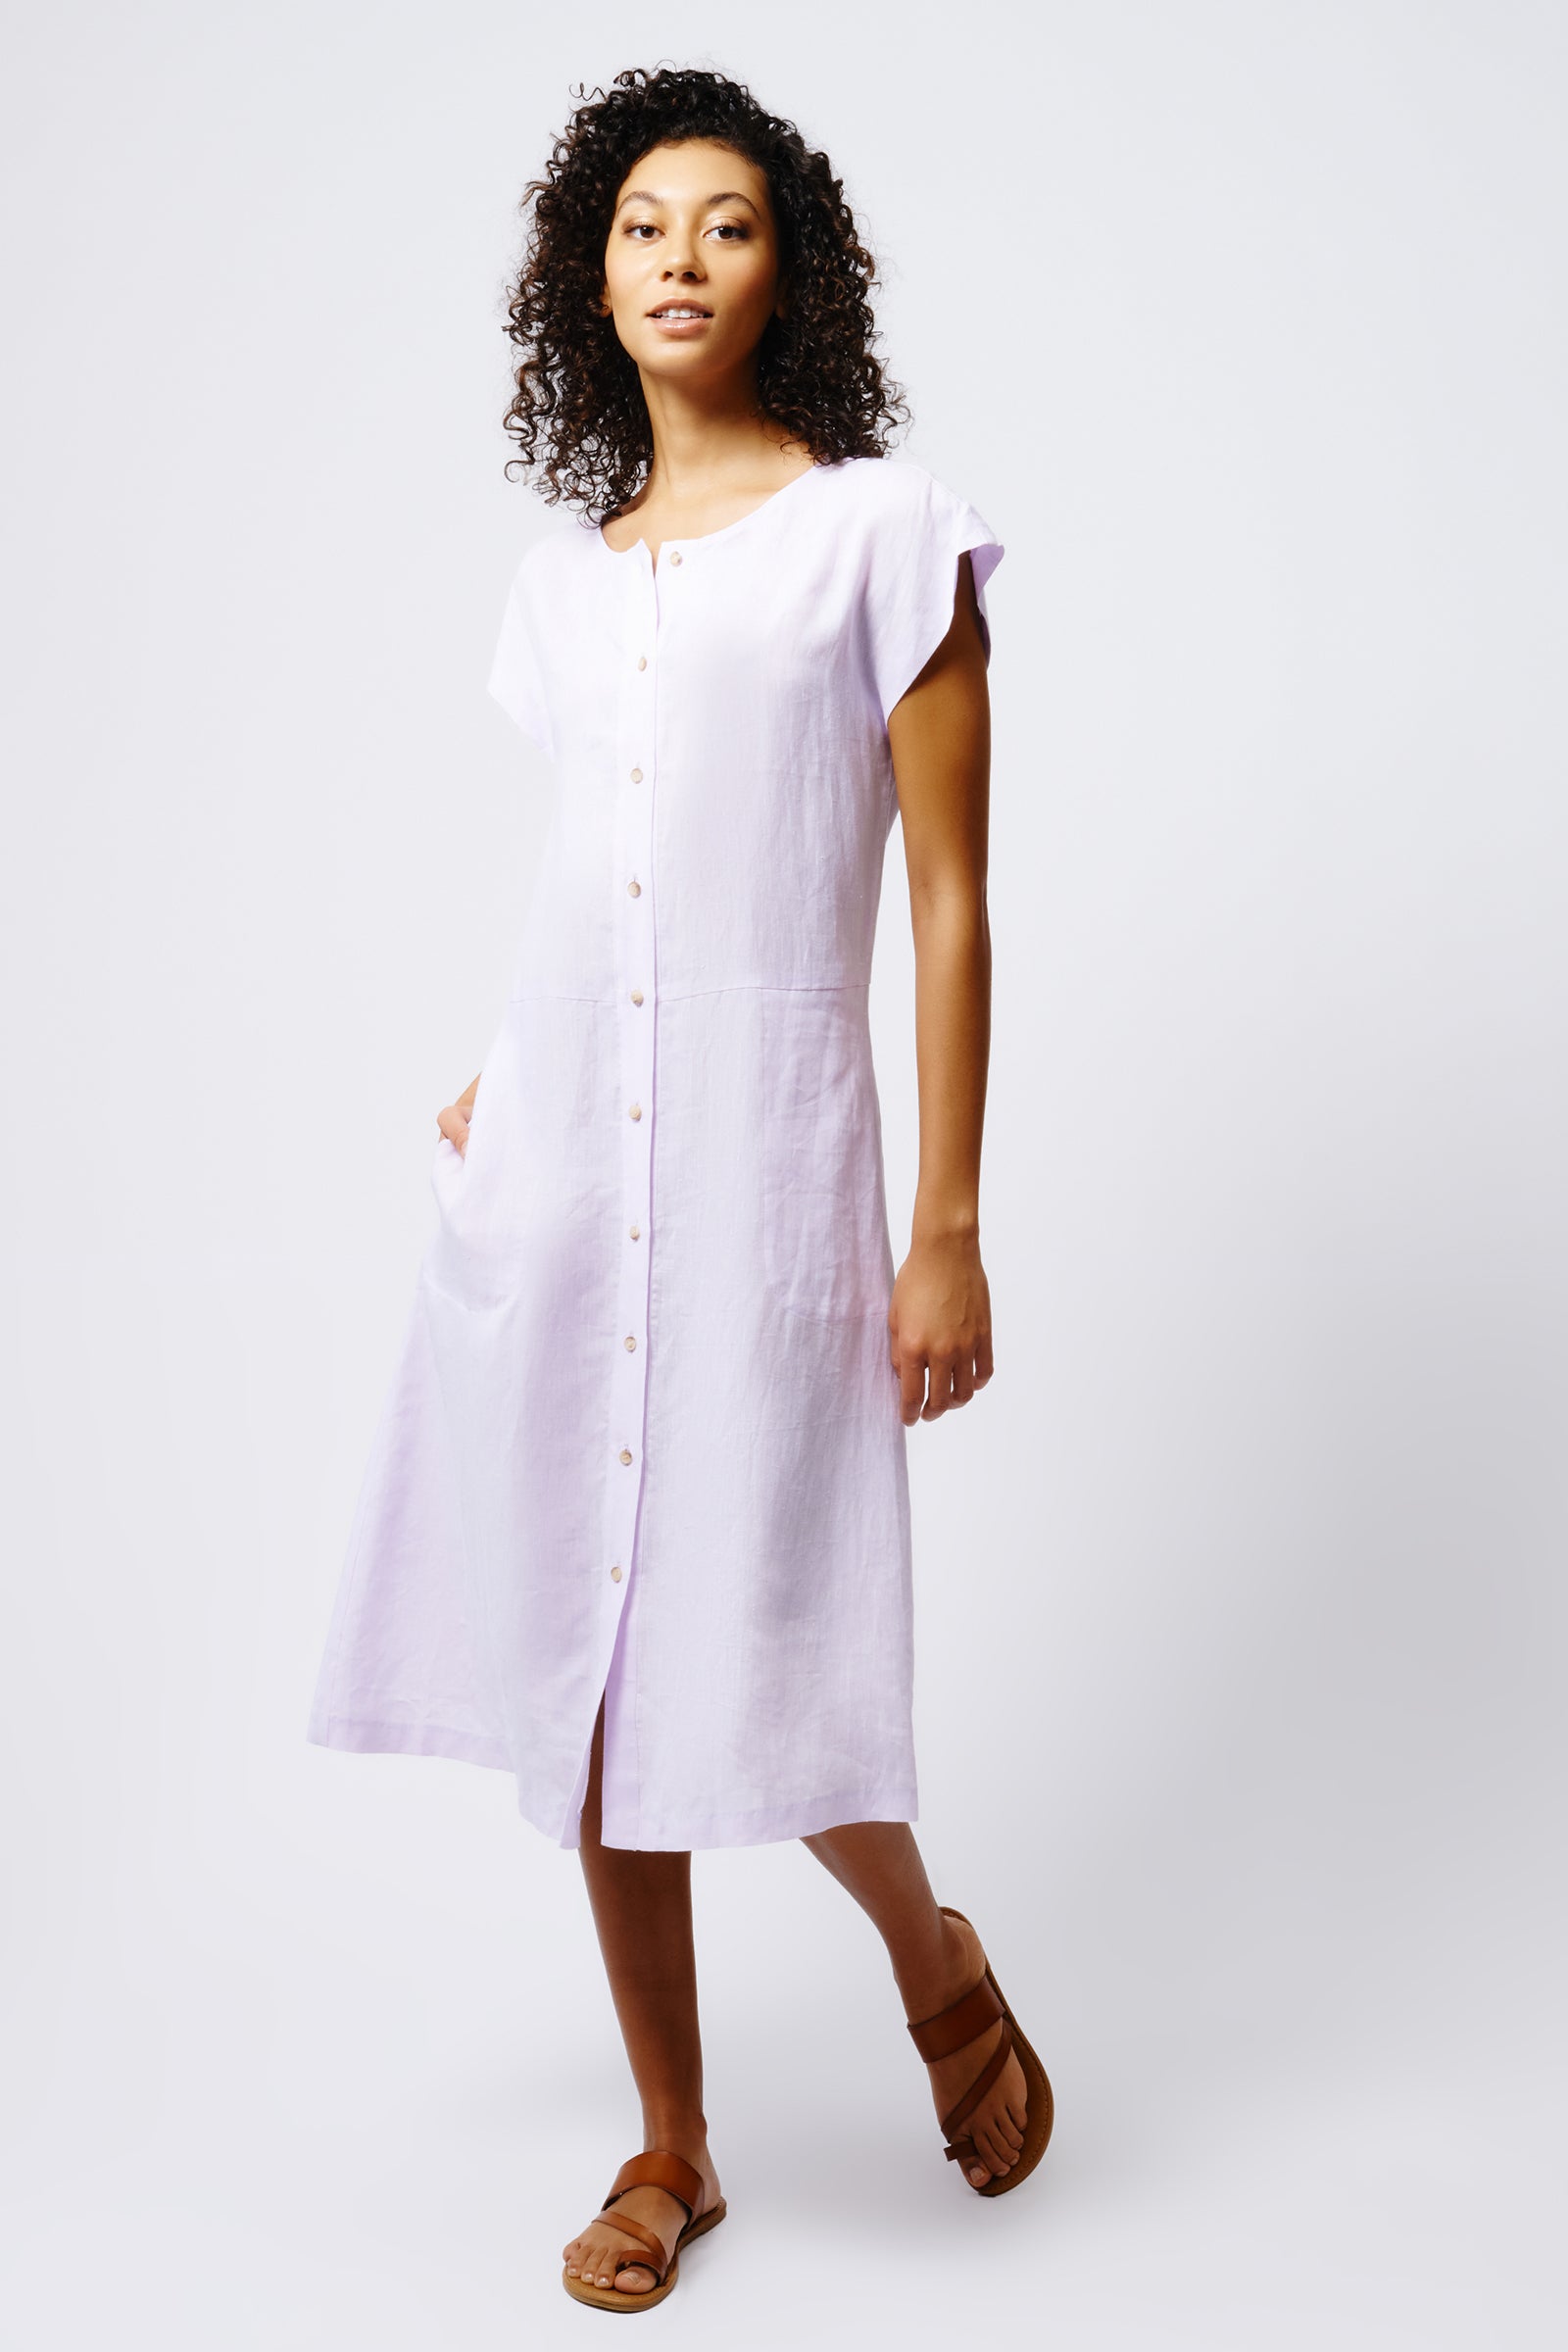 Kal Rieman Harlow Cap Sleeve Dress in Lavender Linen on Model Front View Full 4